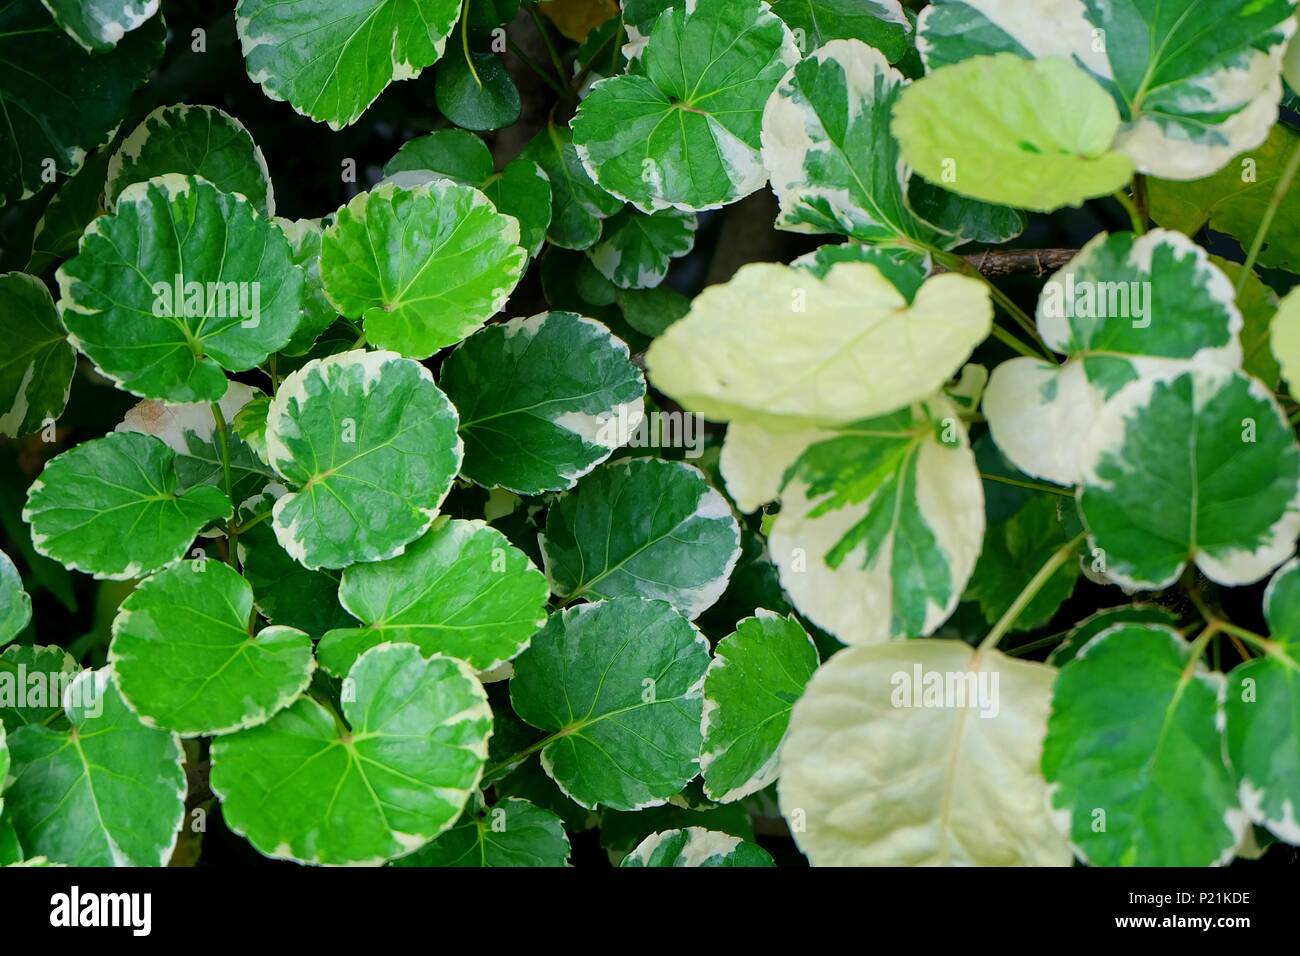 Ecological Concept, Green and White Stripe Leaves of Polyscias Guilfoylei or Geranium Aralia Plants for Garden Decoration. Stock Photo